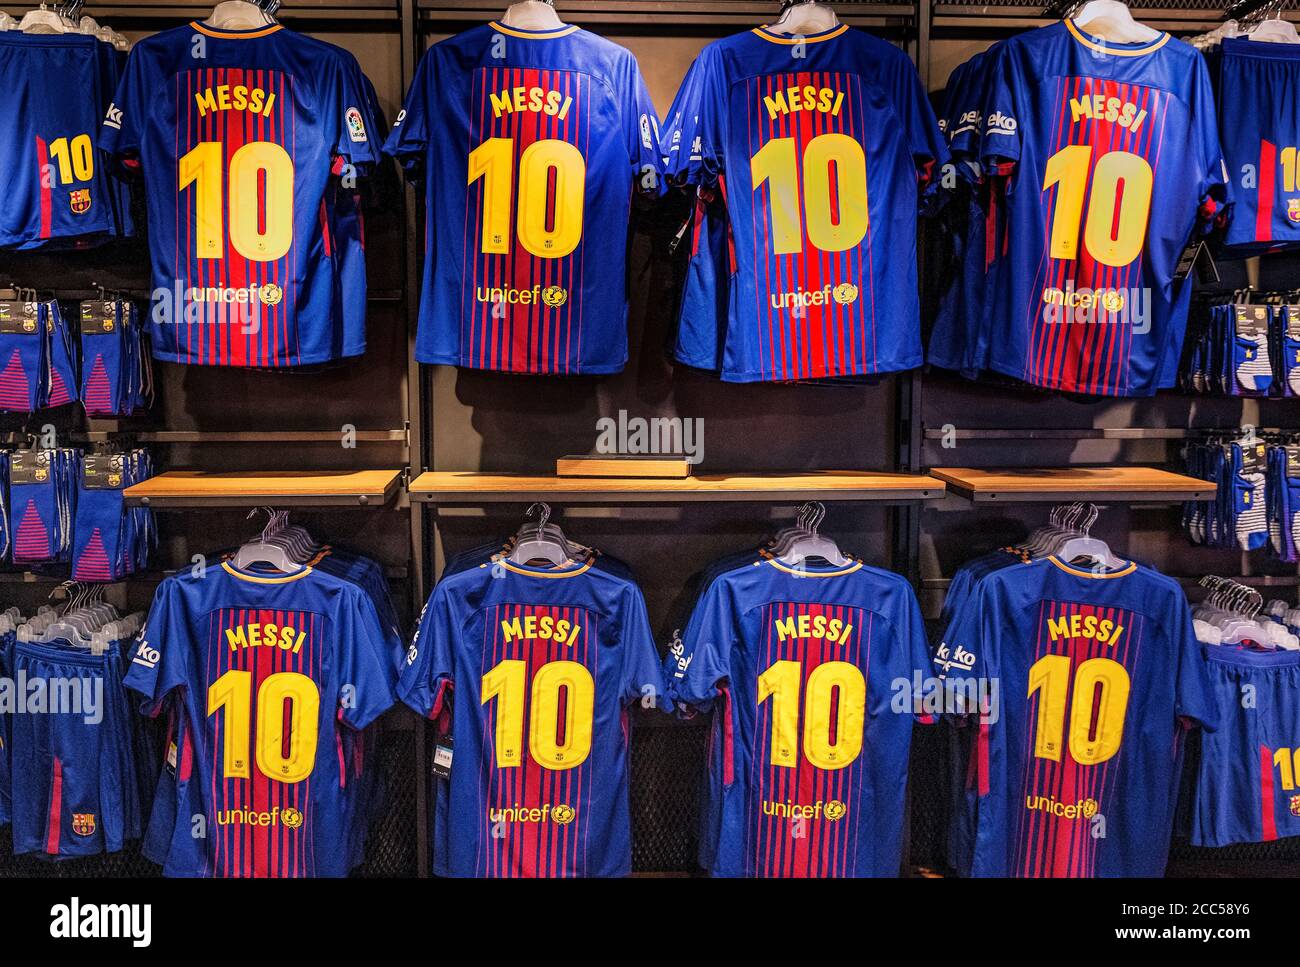 Beliebte Messi Jerseys dominieren das Camp Nou, Barcelona, Spanien. Stockfoto